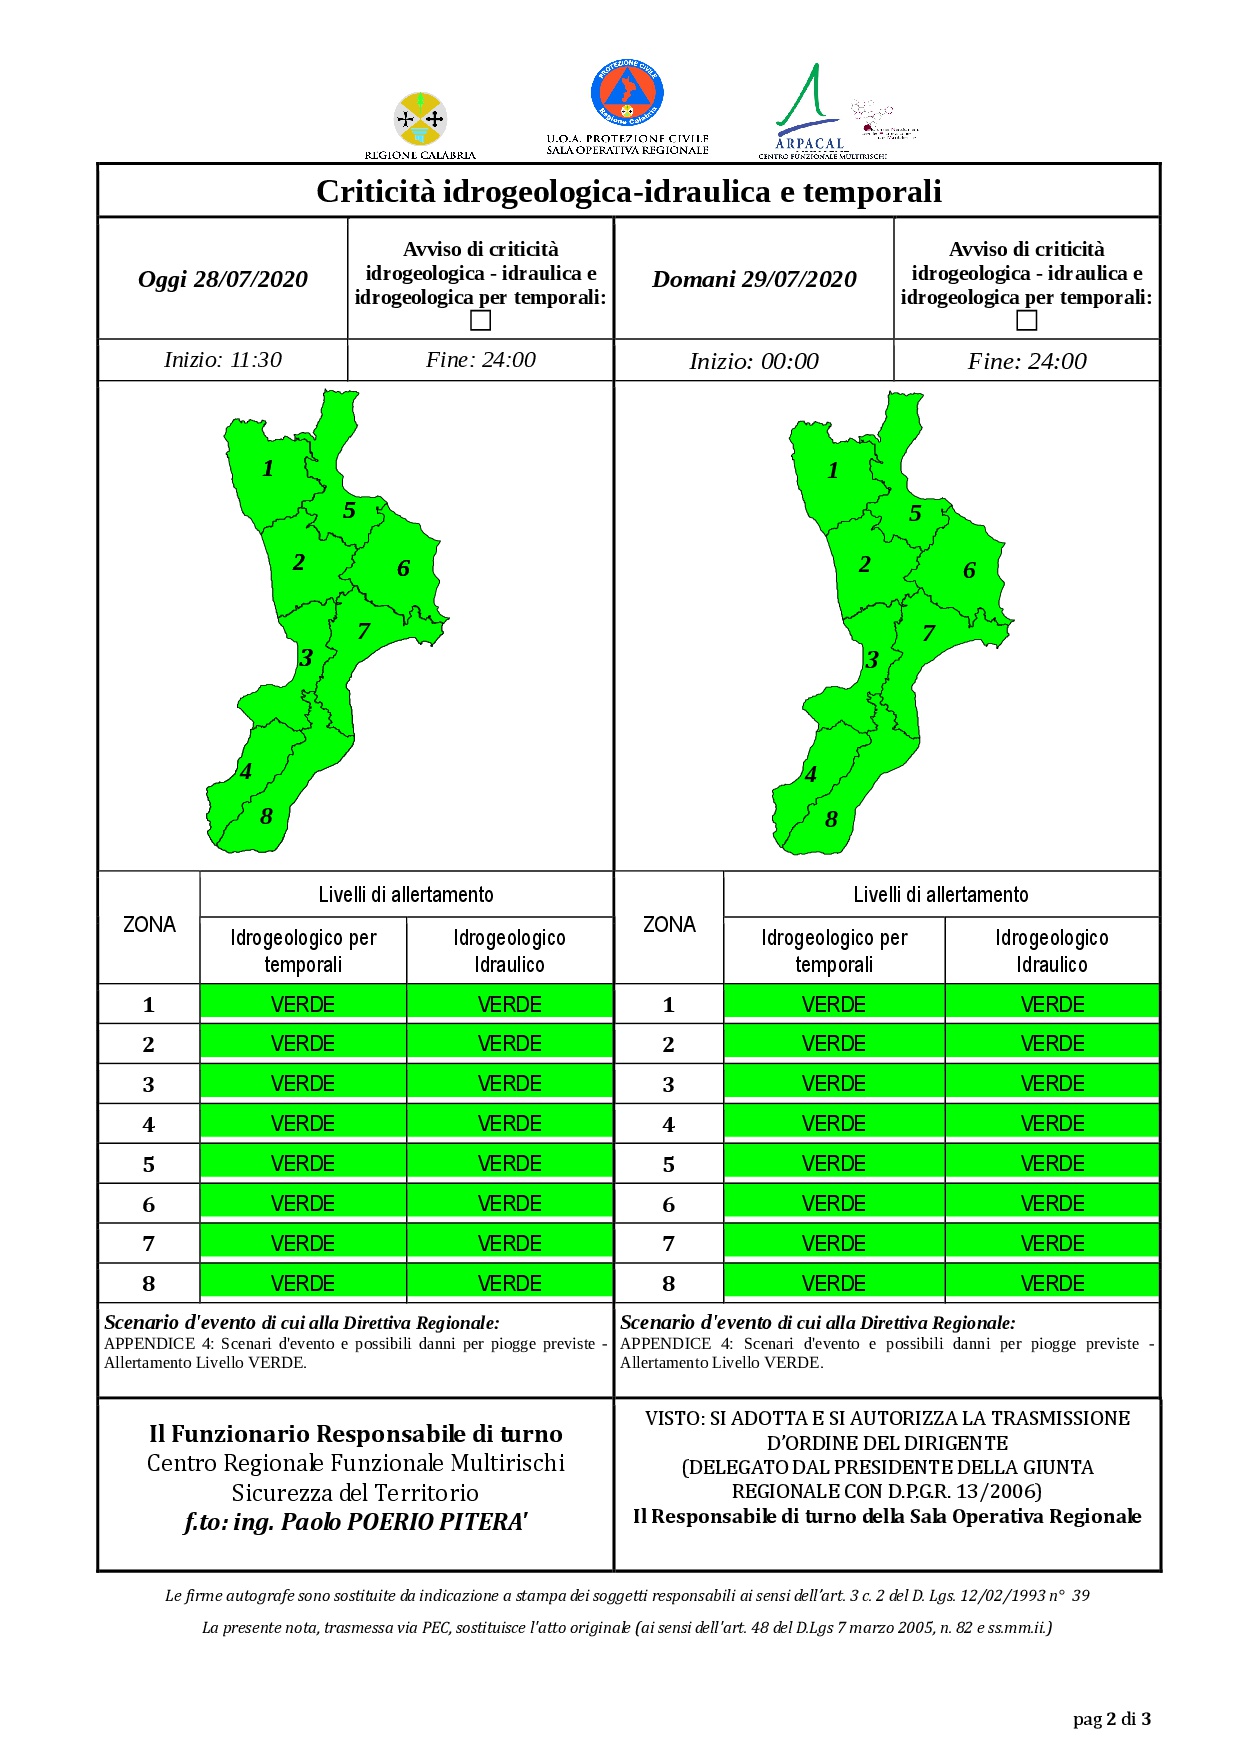 Criticità idrogeologica-idraulica e temporali in Calabria 28-07-2020